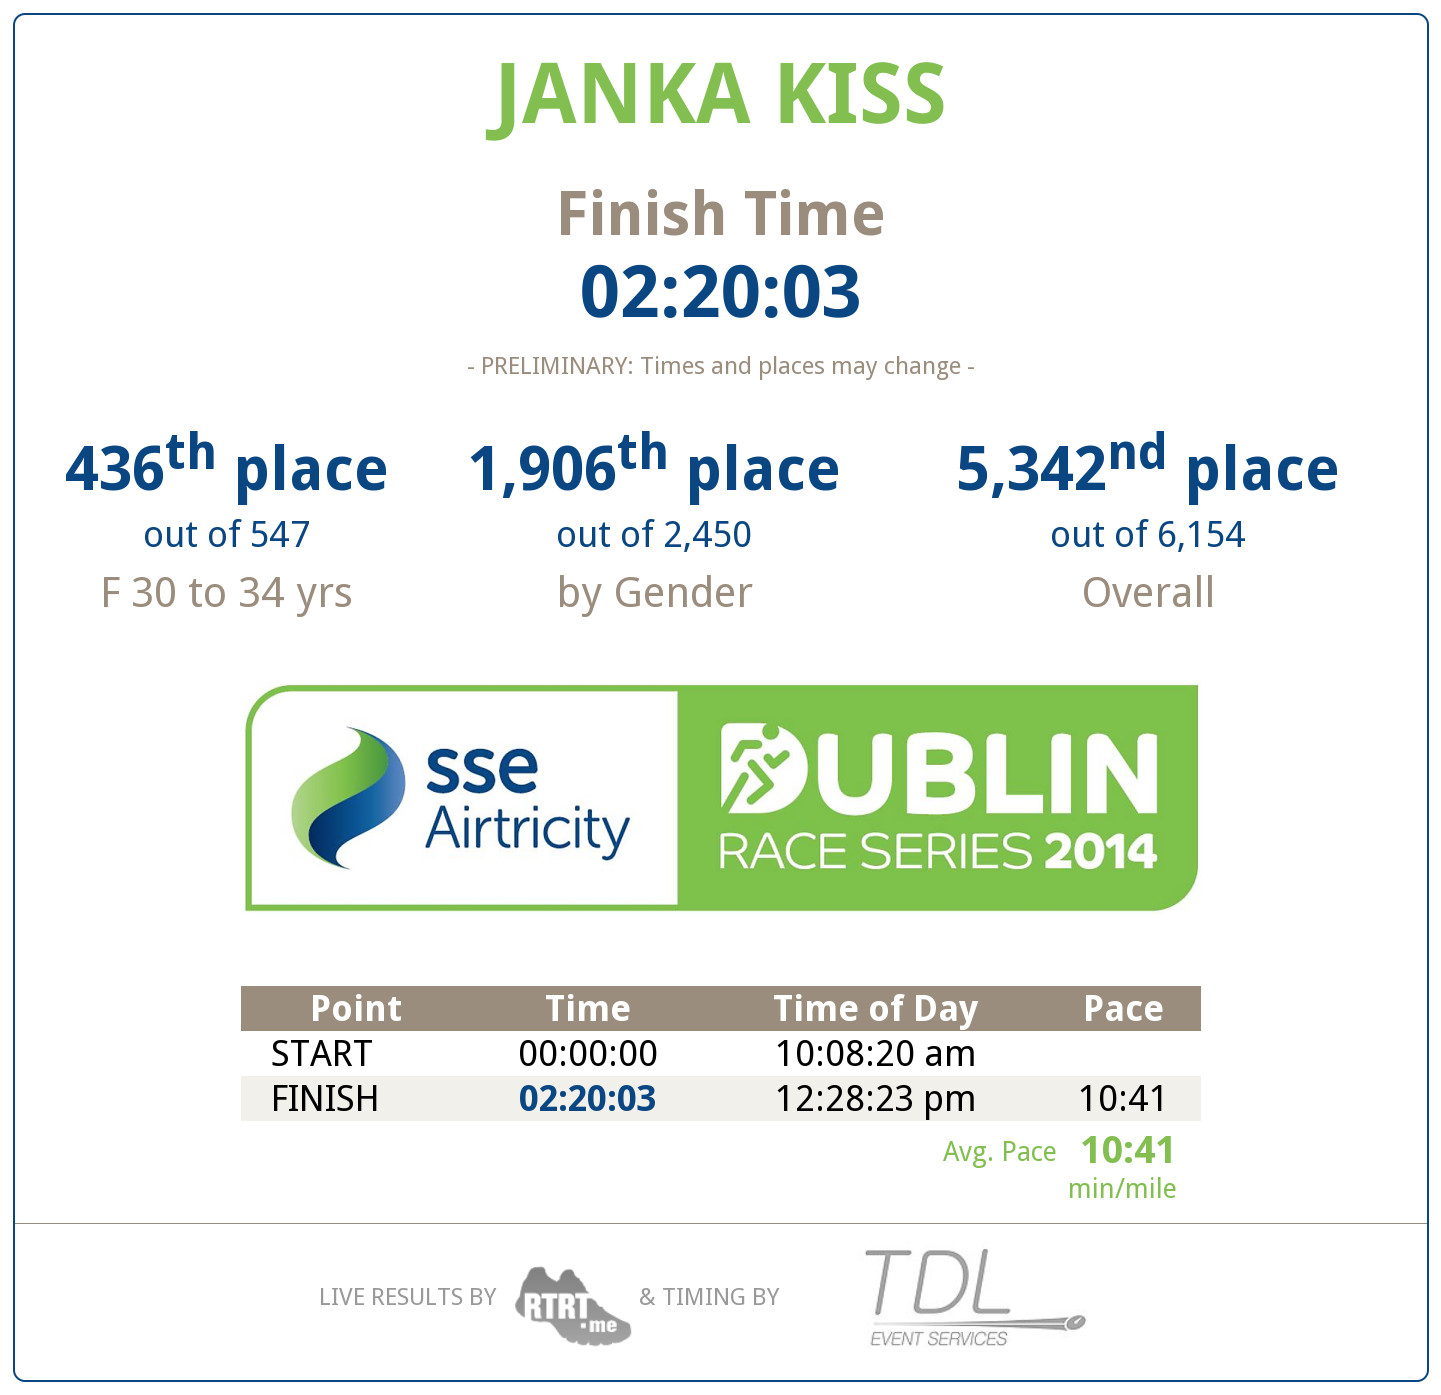 sse-airtricity-dublin-half-marathon-janka-kiss.jpeg